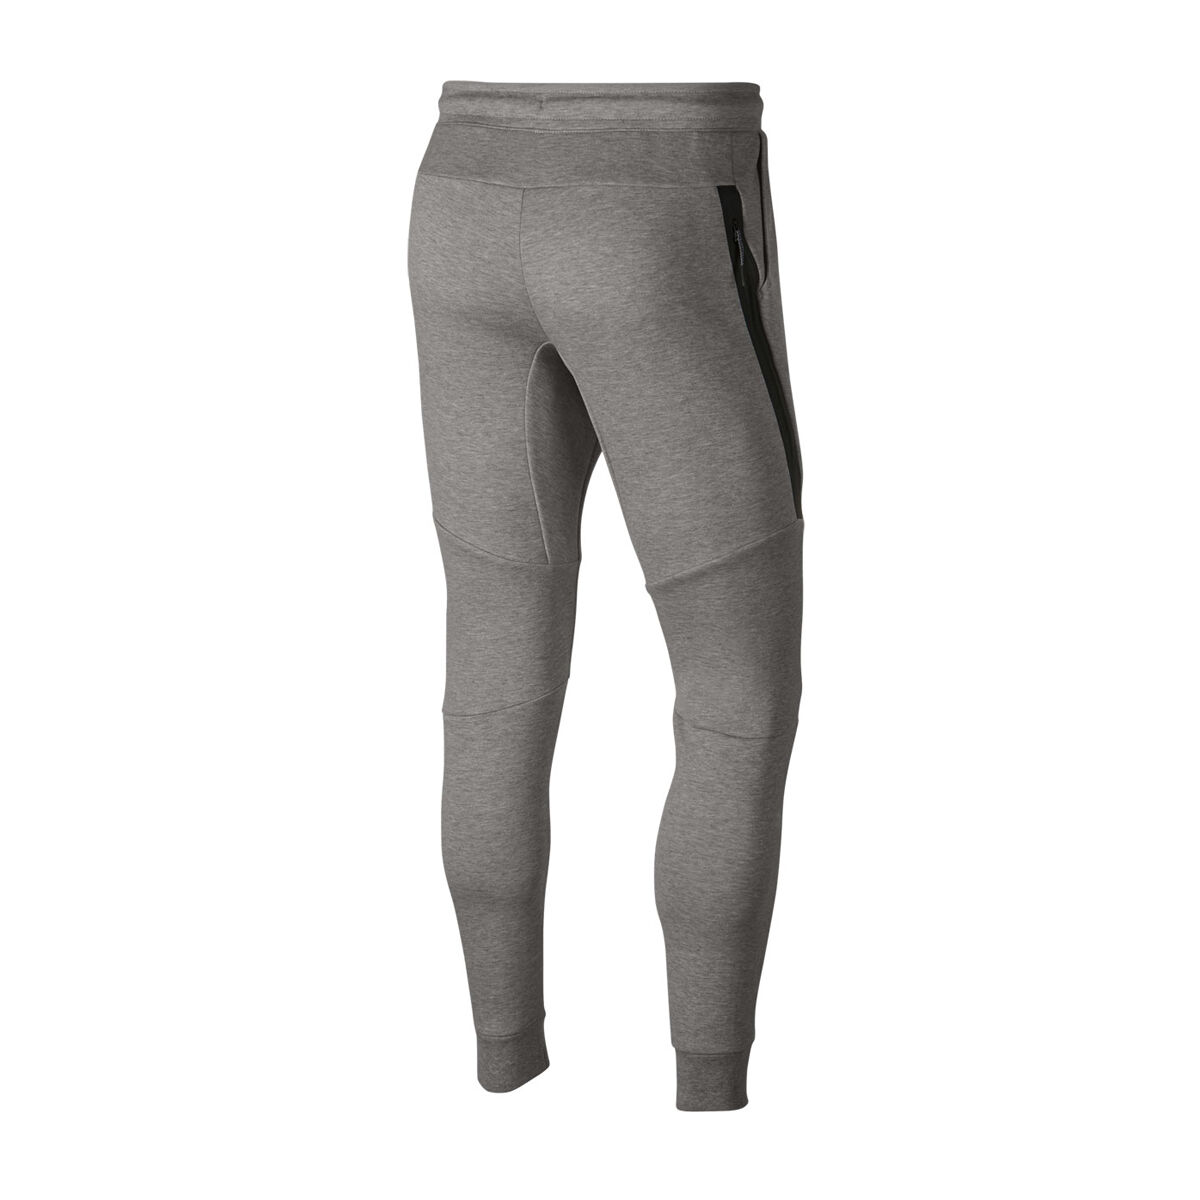 Mua Nike Sportswear Tech Fleece Men's Pants trên Amazon Mỹ chính hãng 2023  | Fado